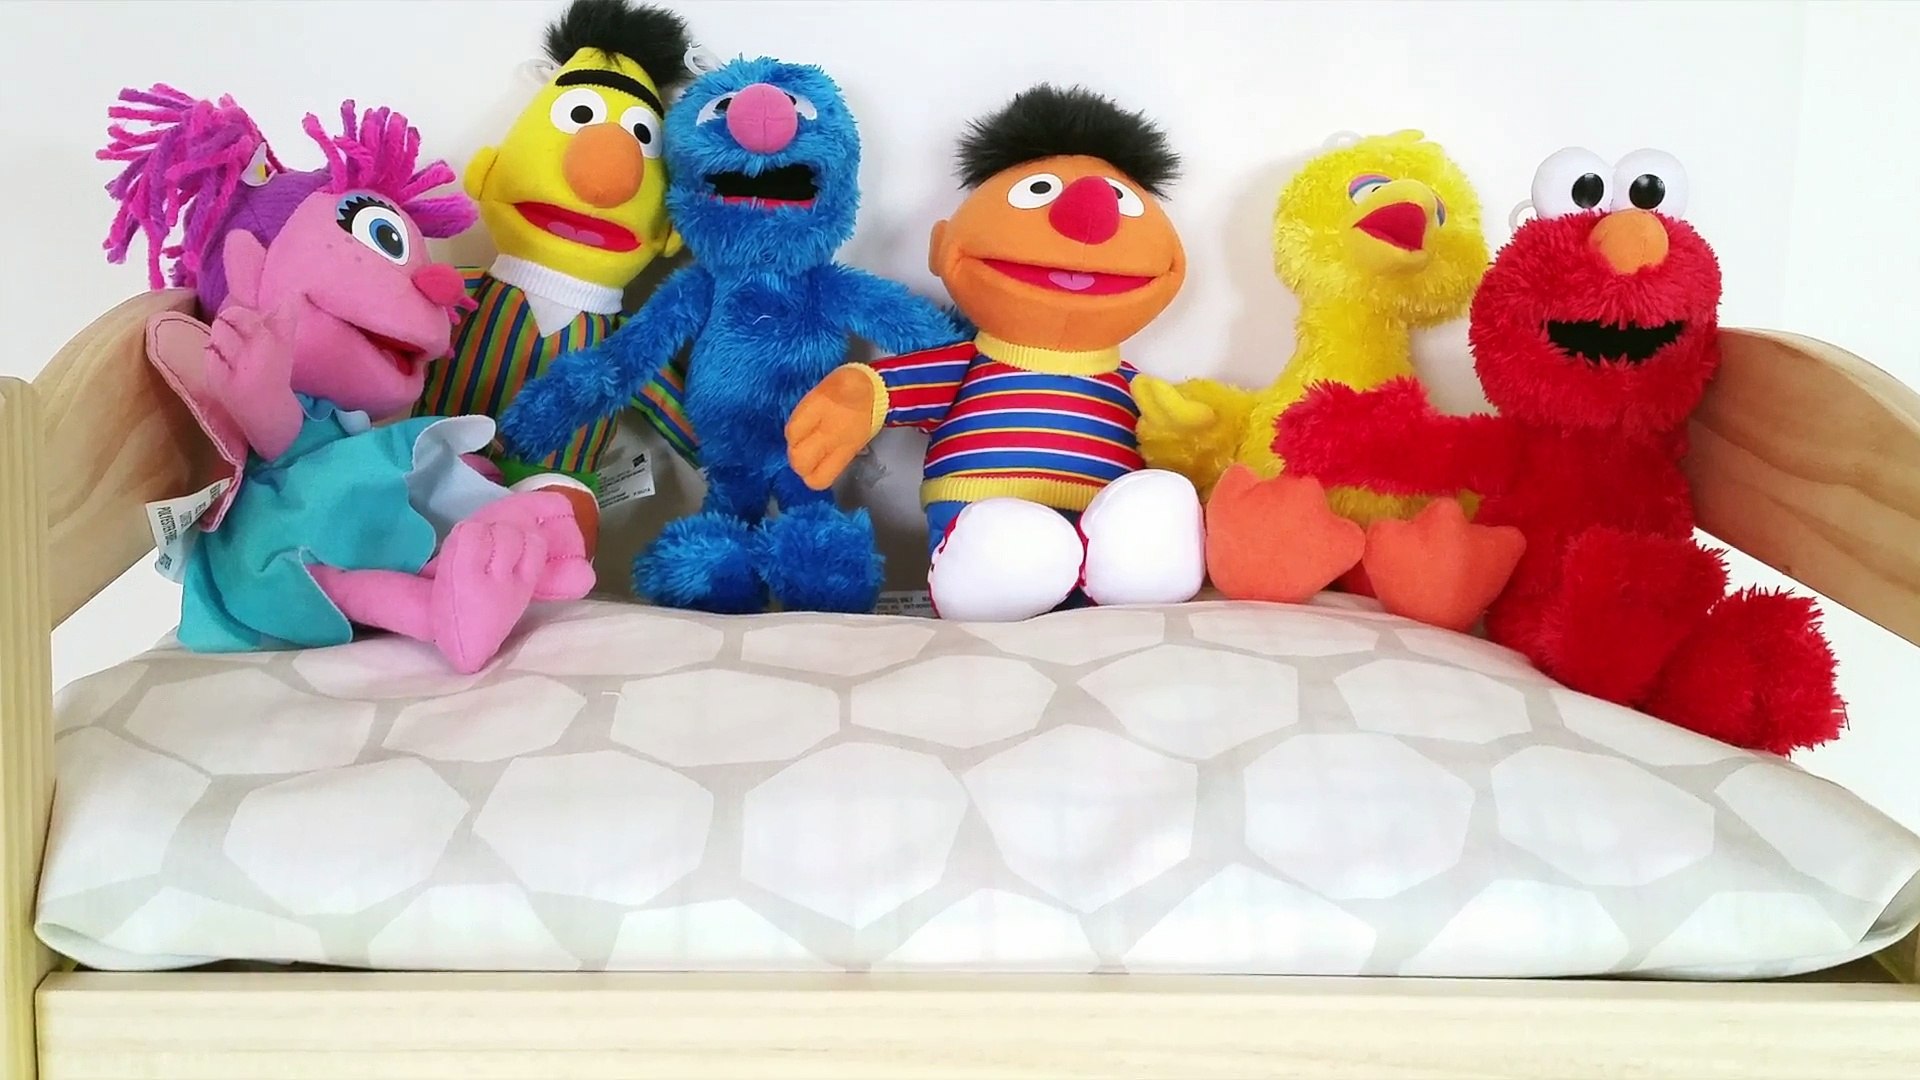 Finger Family Song Nursery Rhymes Elmo Cookie Monster Ernie Abby Bert -  YouTube - Video Dailymotion